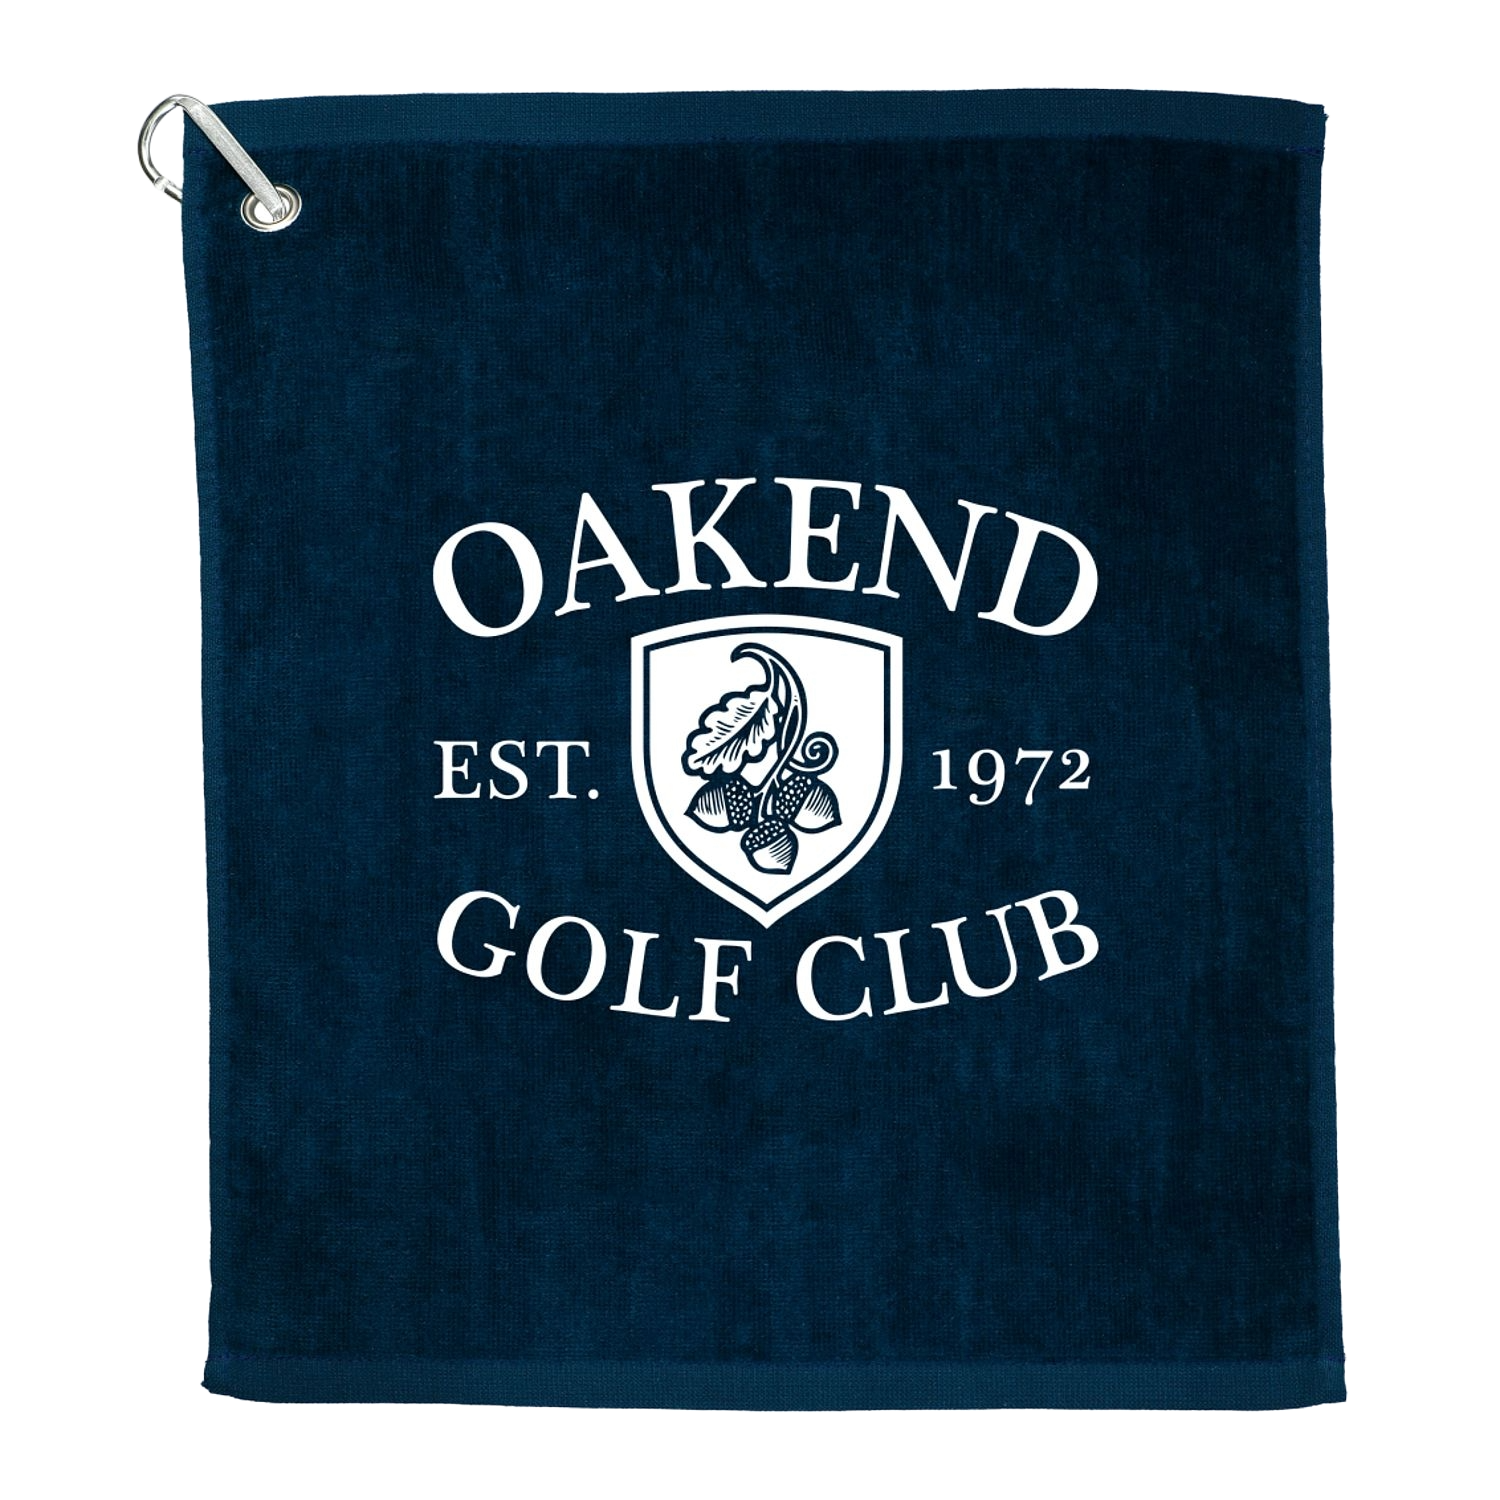 15" x 18" Terry Golf Towel